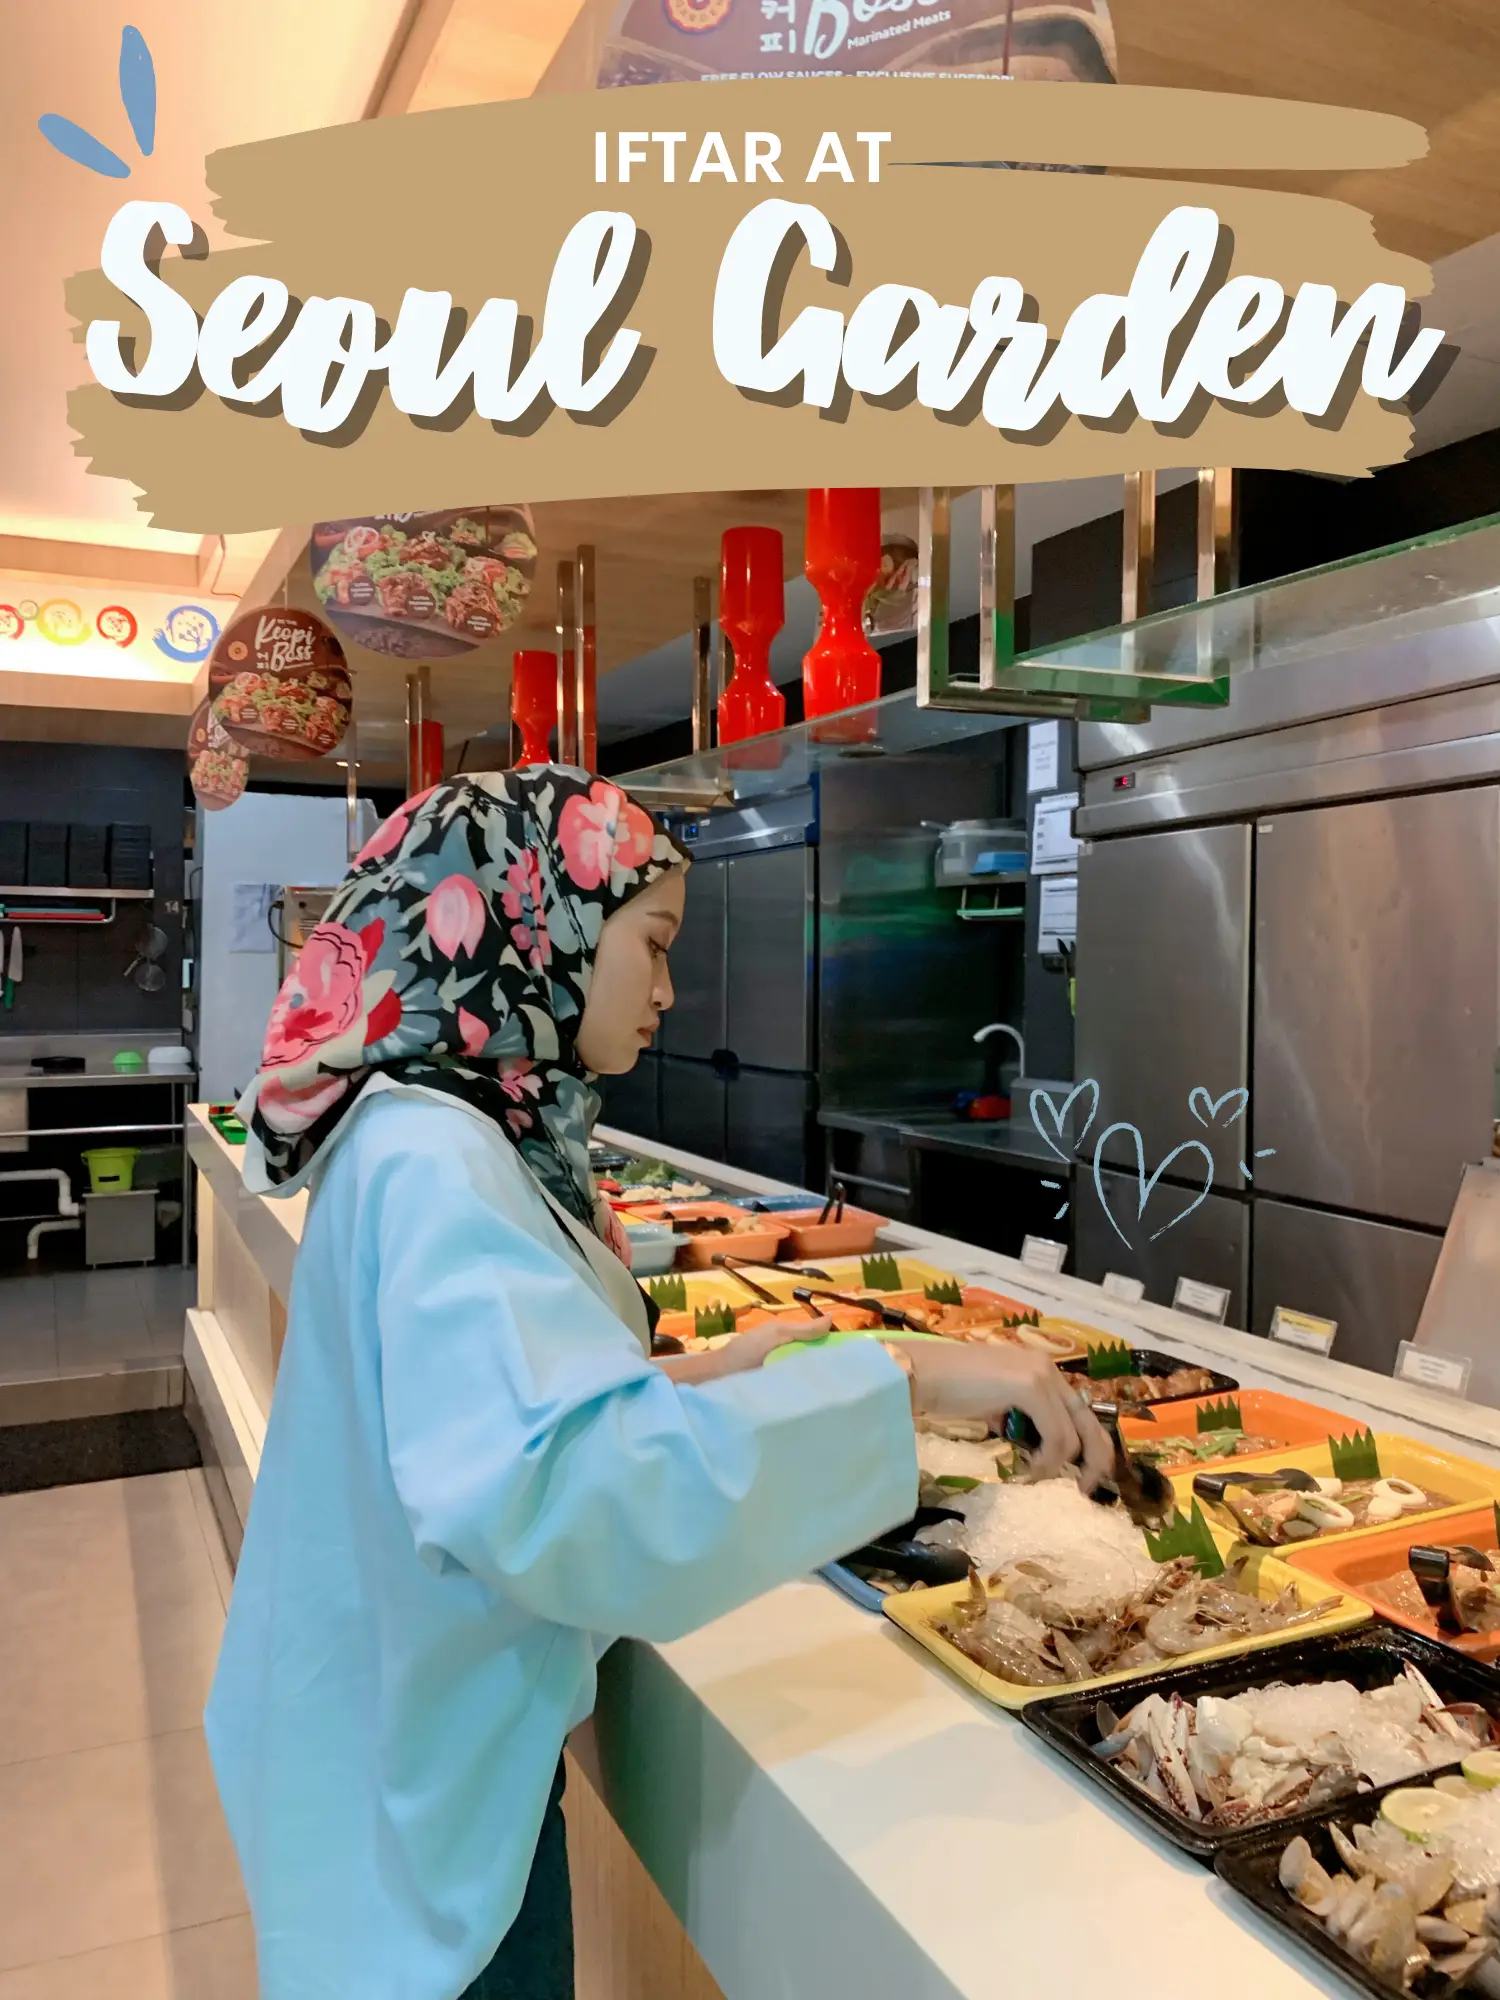 Harga Seoul Garden Carian Lemon8